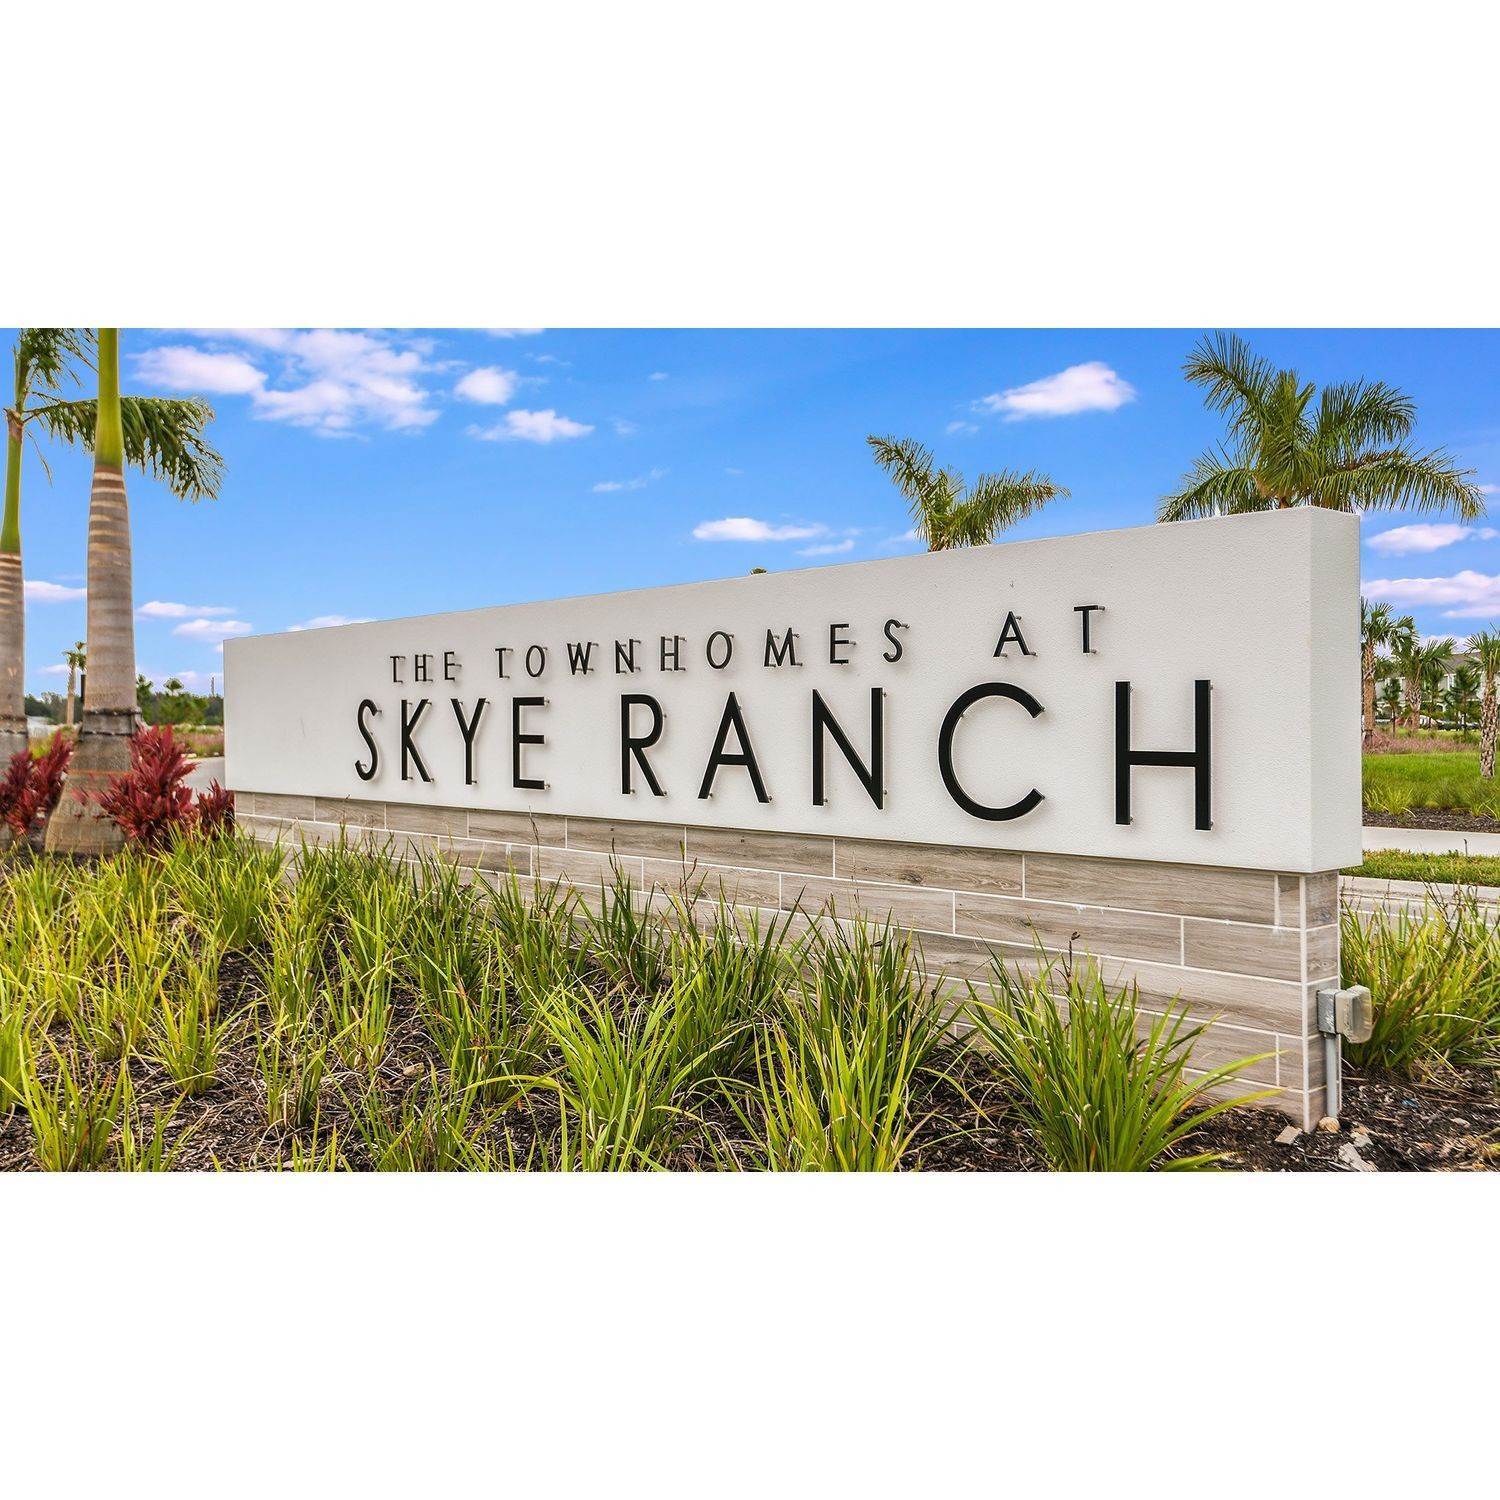 12. The Townhomes at Skye Ranch building at 8429 Lunar Skye Street, Sarasota, FL 34241